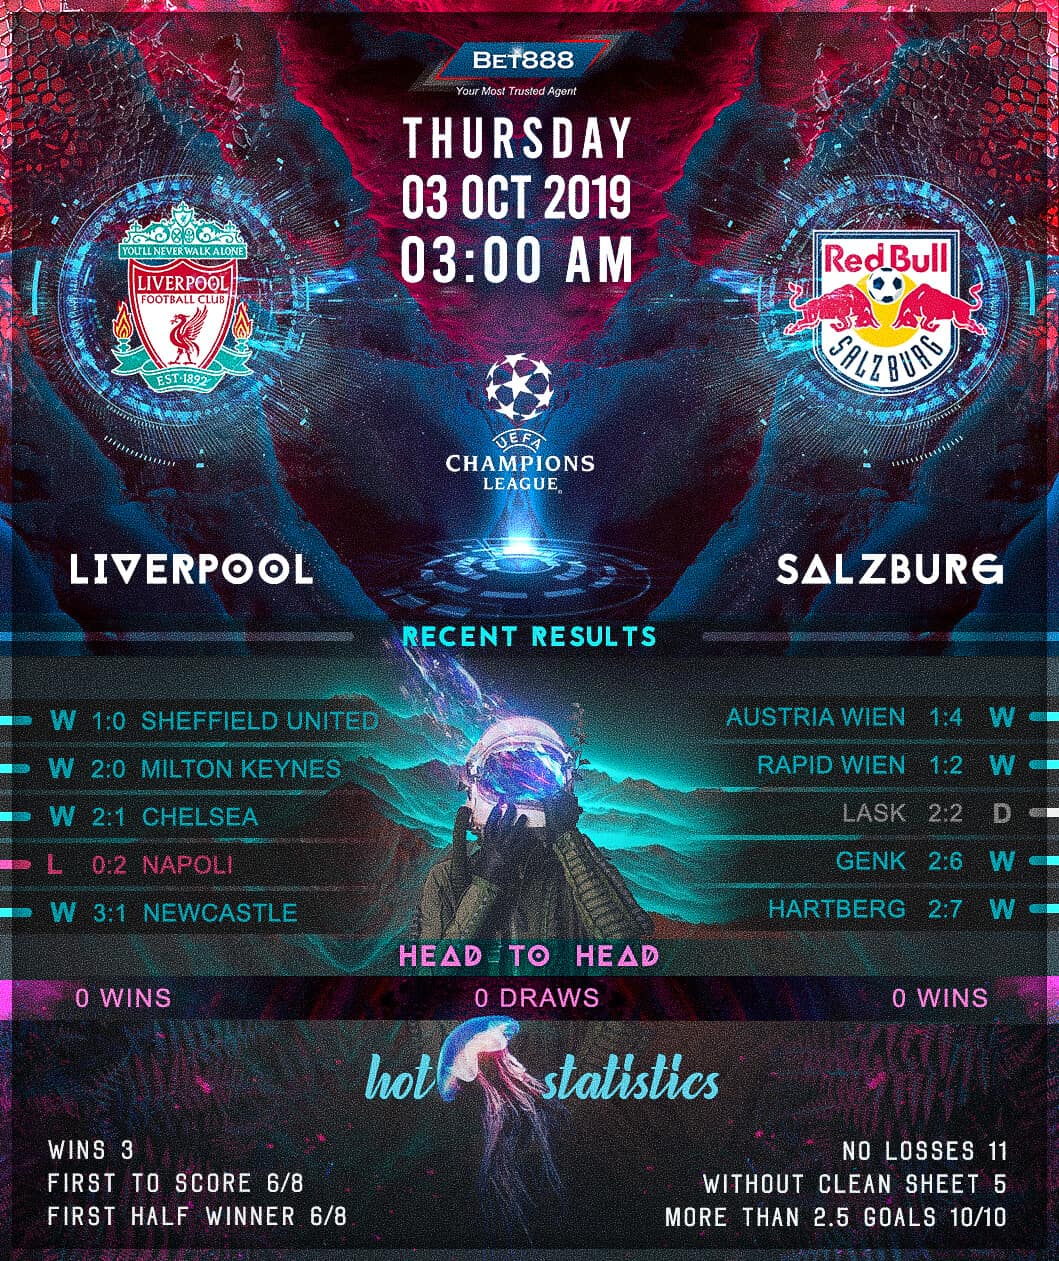 Liverpool vs Red Bull Salzburg﻿ 03/10/19